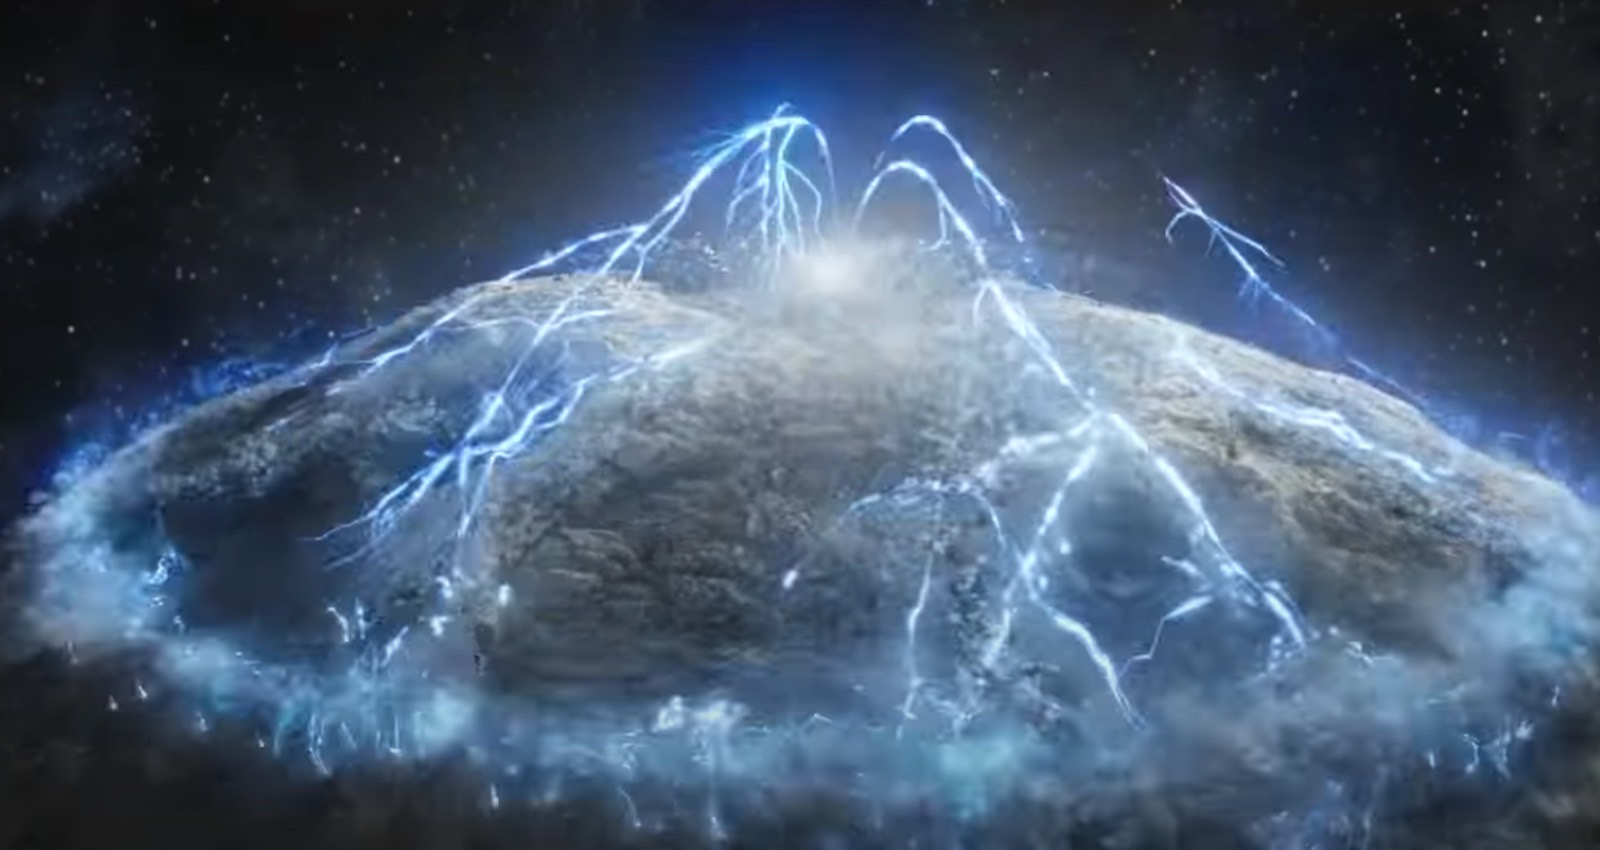 Thor: Love and Thunder' Trailer Reveals Gorr the God Butcher